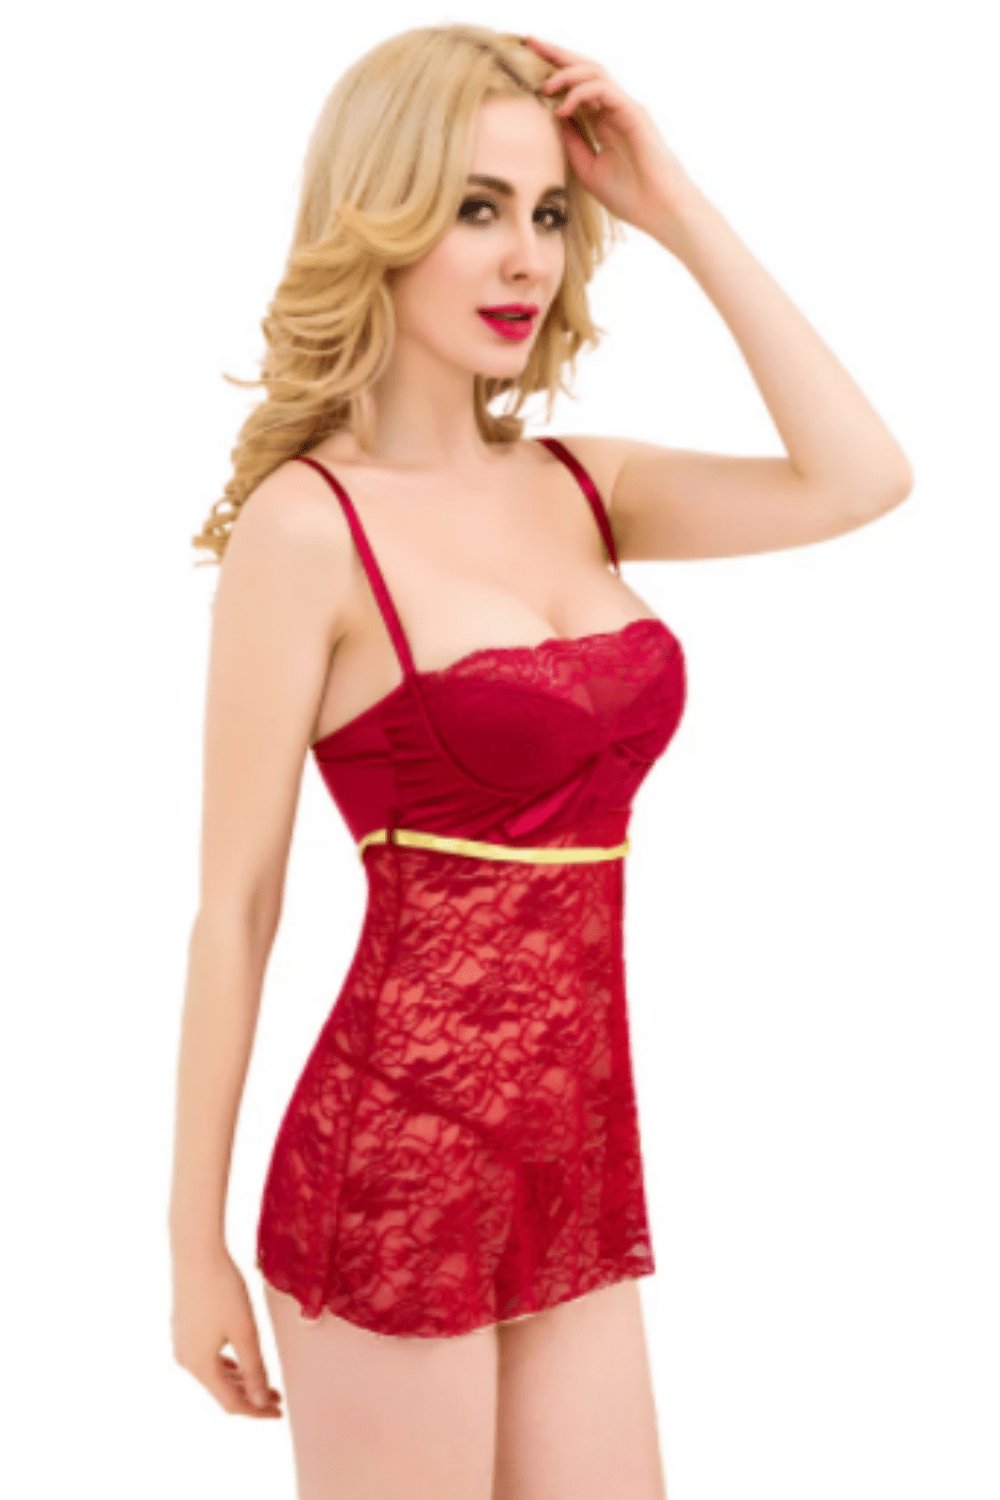 Plus Size Babydoll Sleepwear Lingerie - Red - TGC Boutique - Lingerie